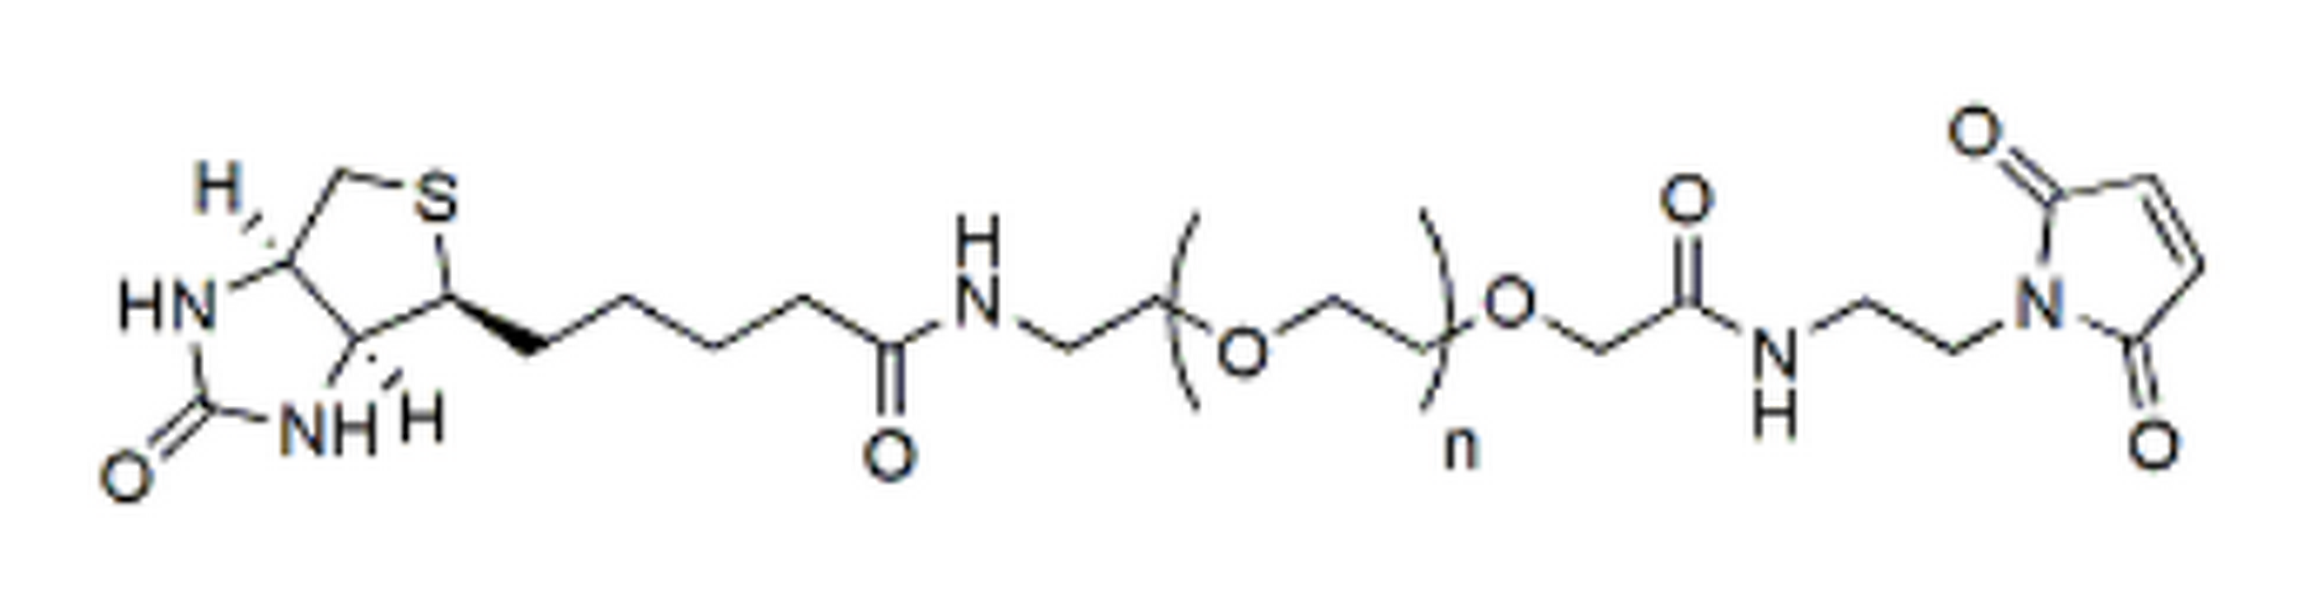 Biotin-PEG-Mal, MW 7.5K